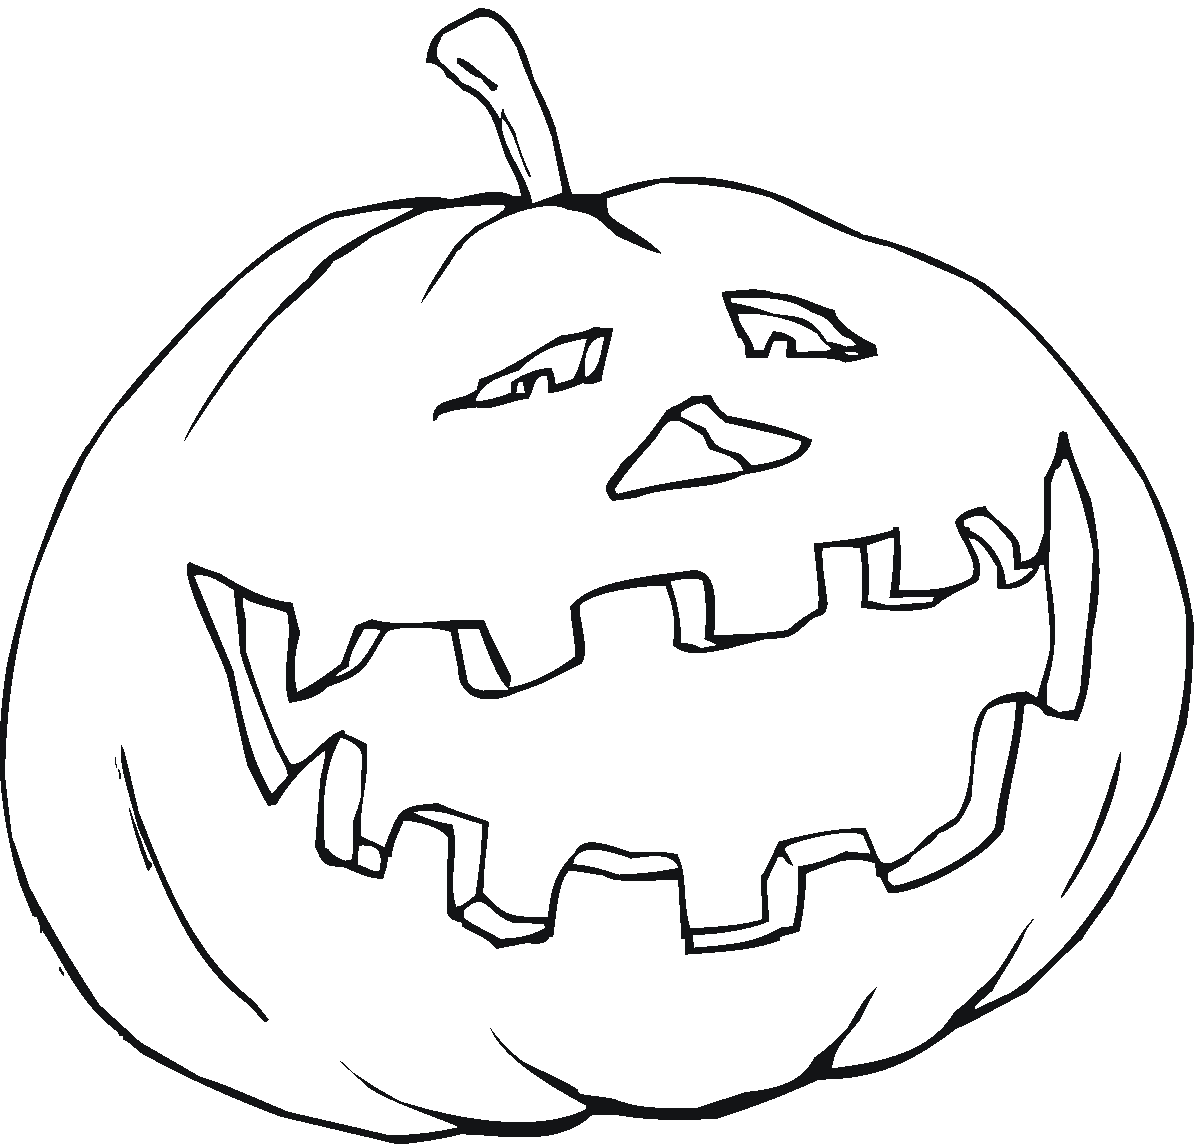 Scary Halloween Pumpkin Preschoolers Free Coloring Page